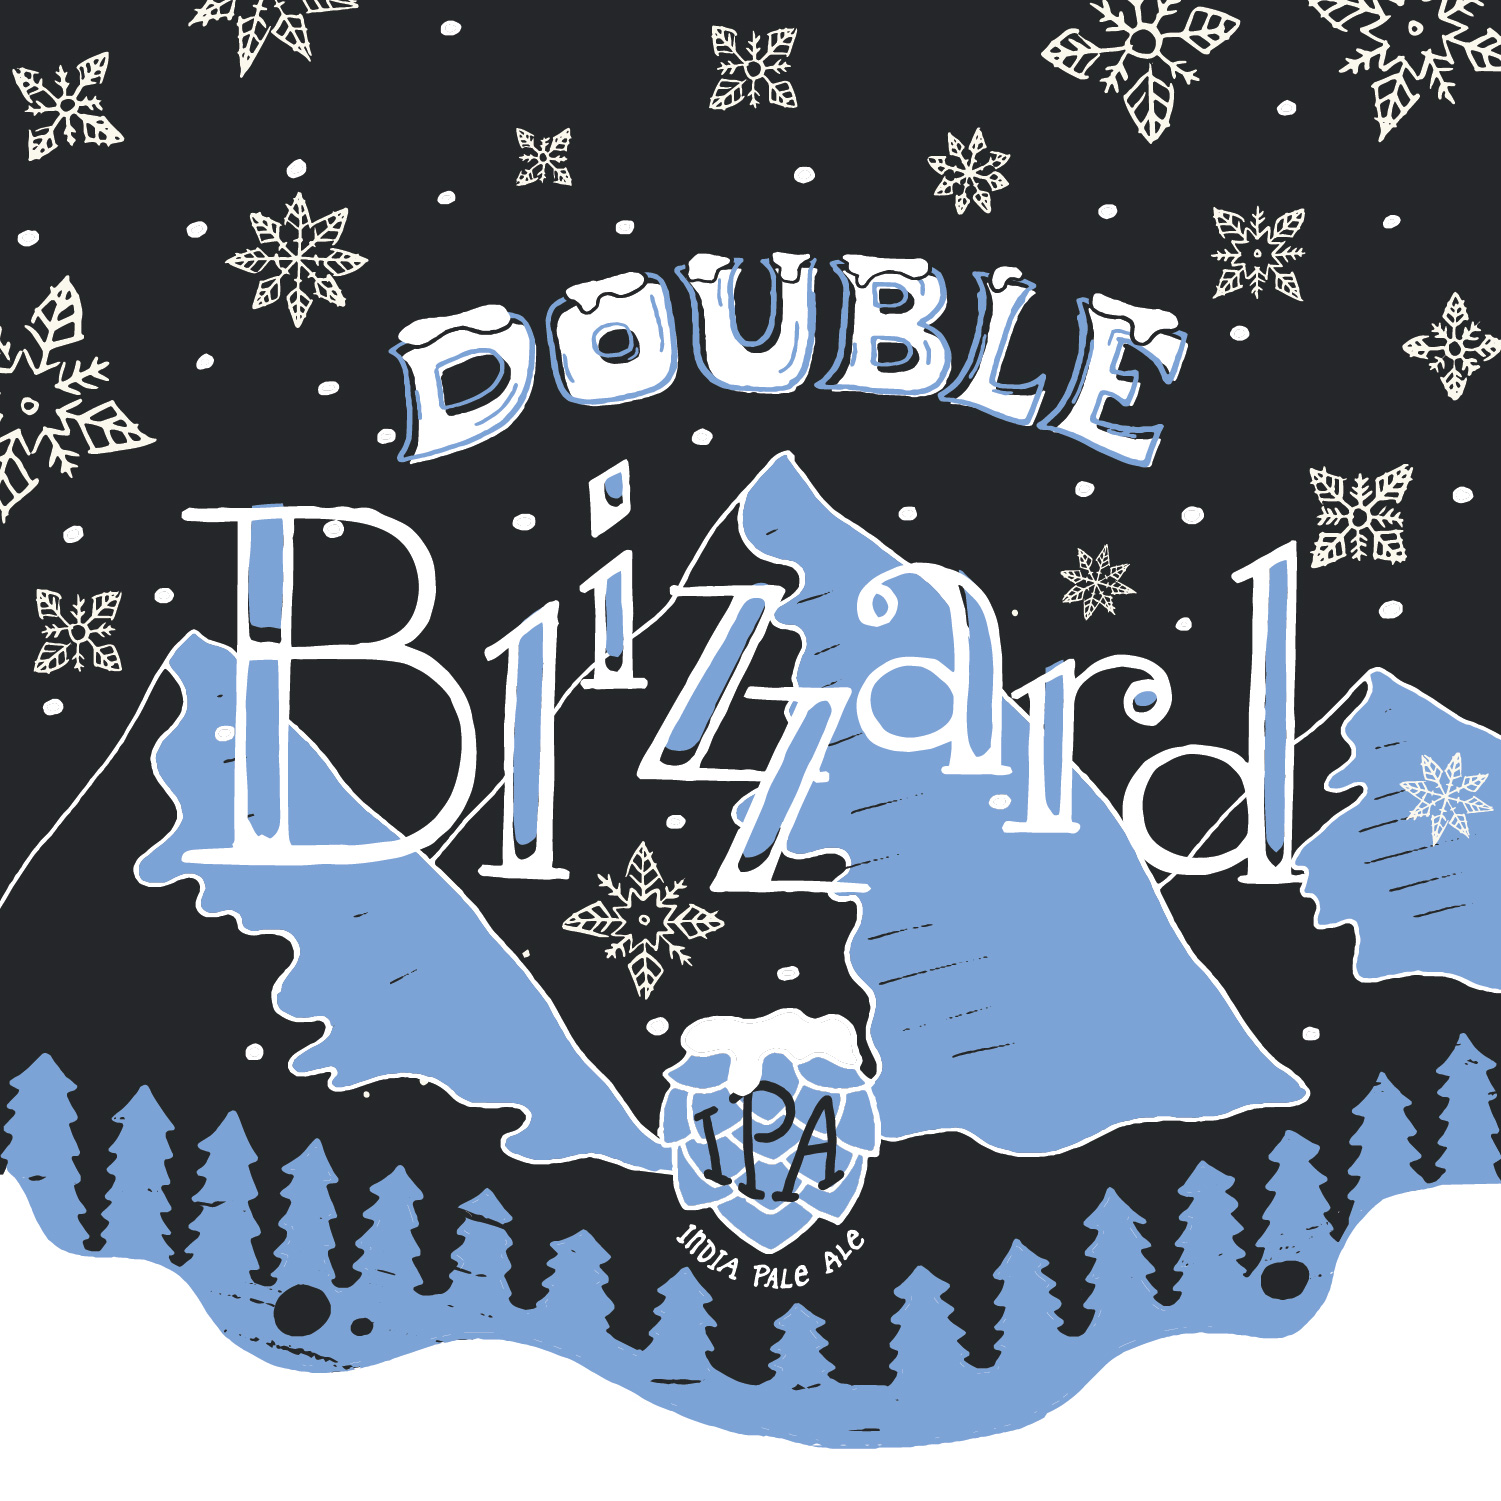 Double Blizzard release